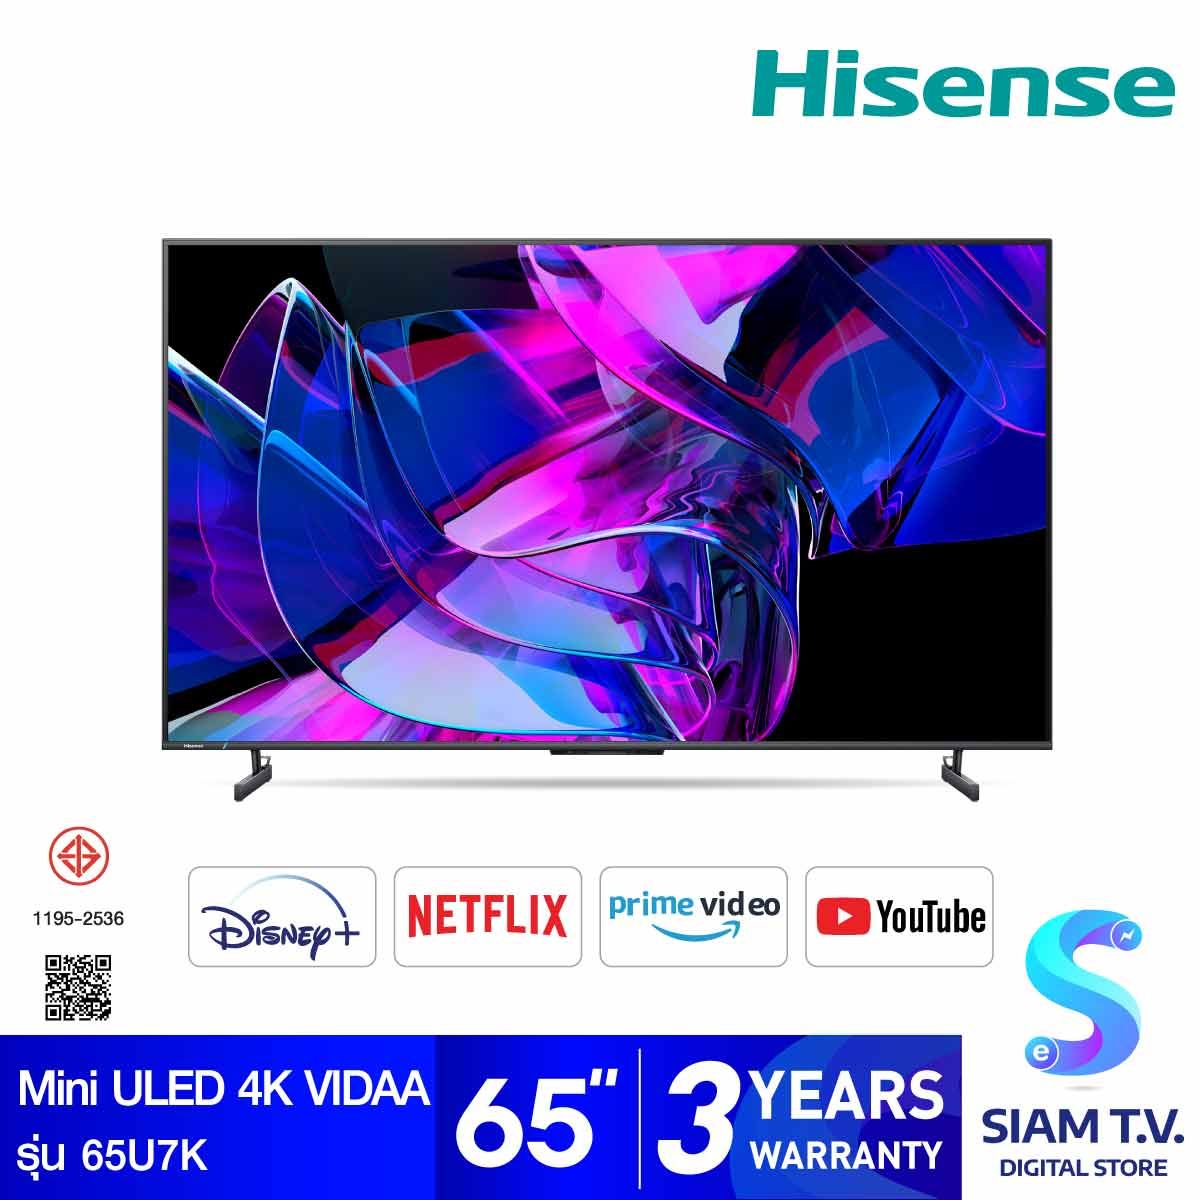 Hisense  Mini ULED TV 4K VIDAA 144 Hz รุ่น 65U7K สมาร์ททีวี 4K ขนาด 65 นิ้ว